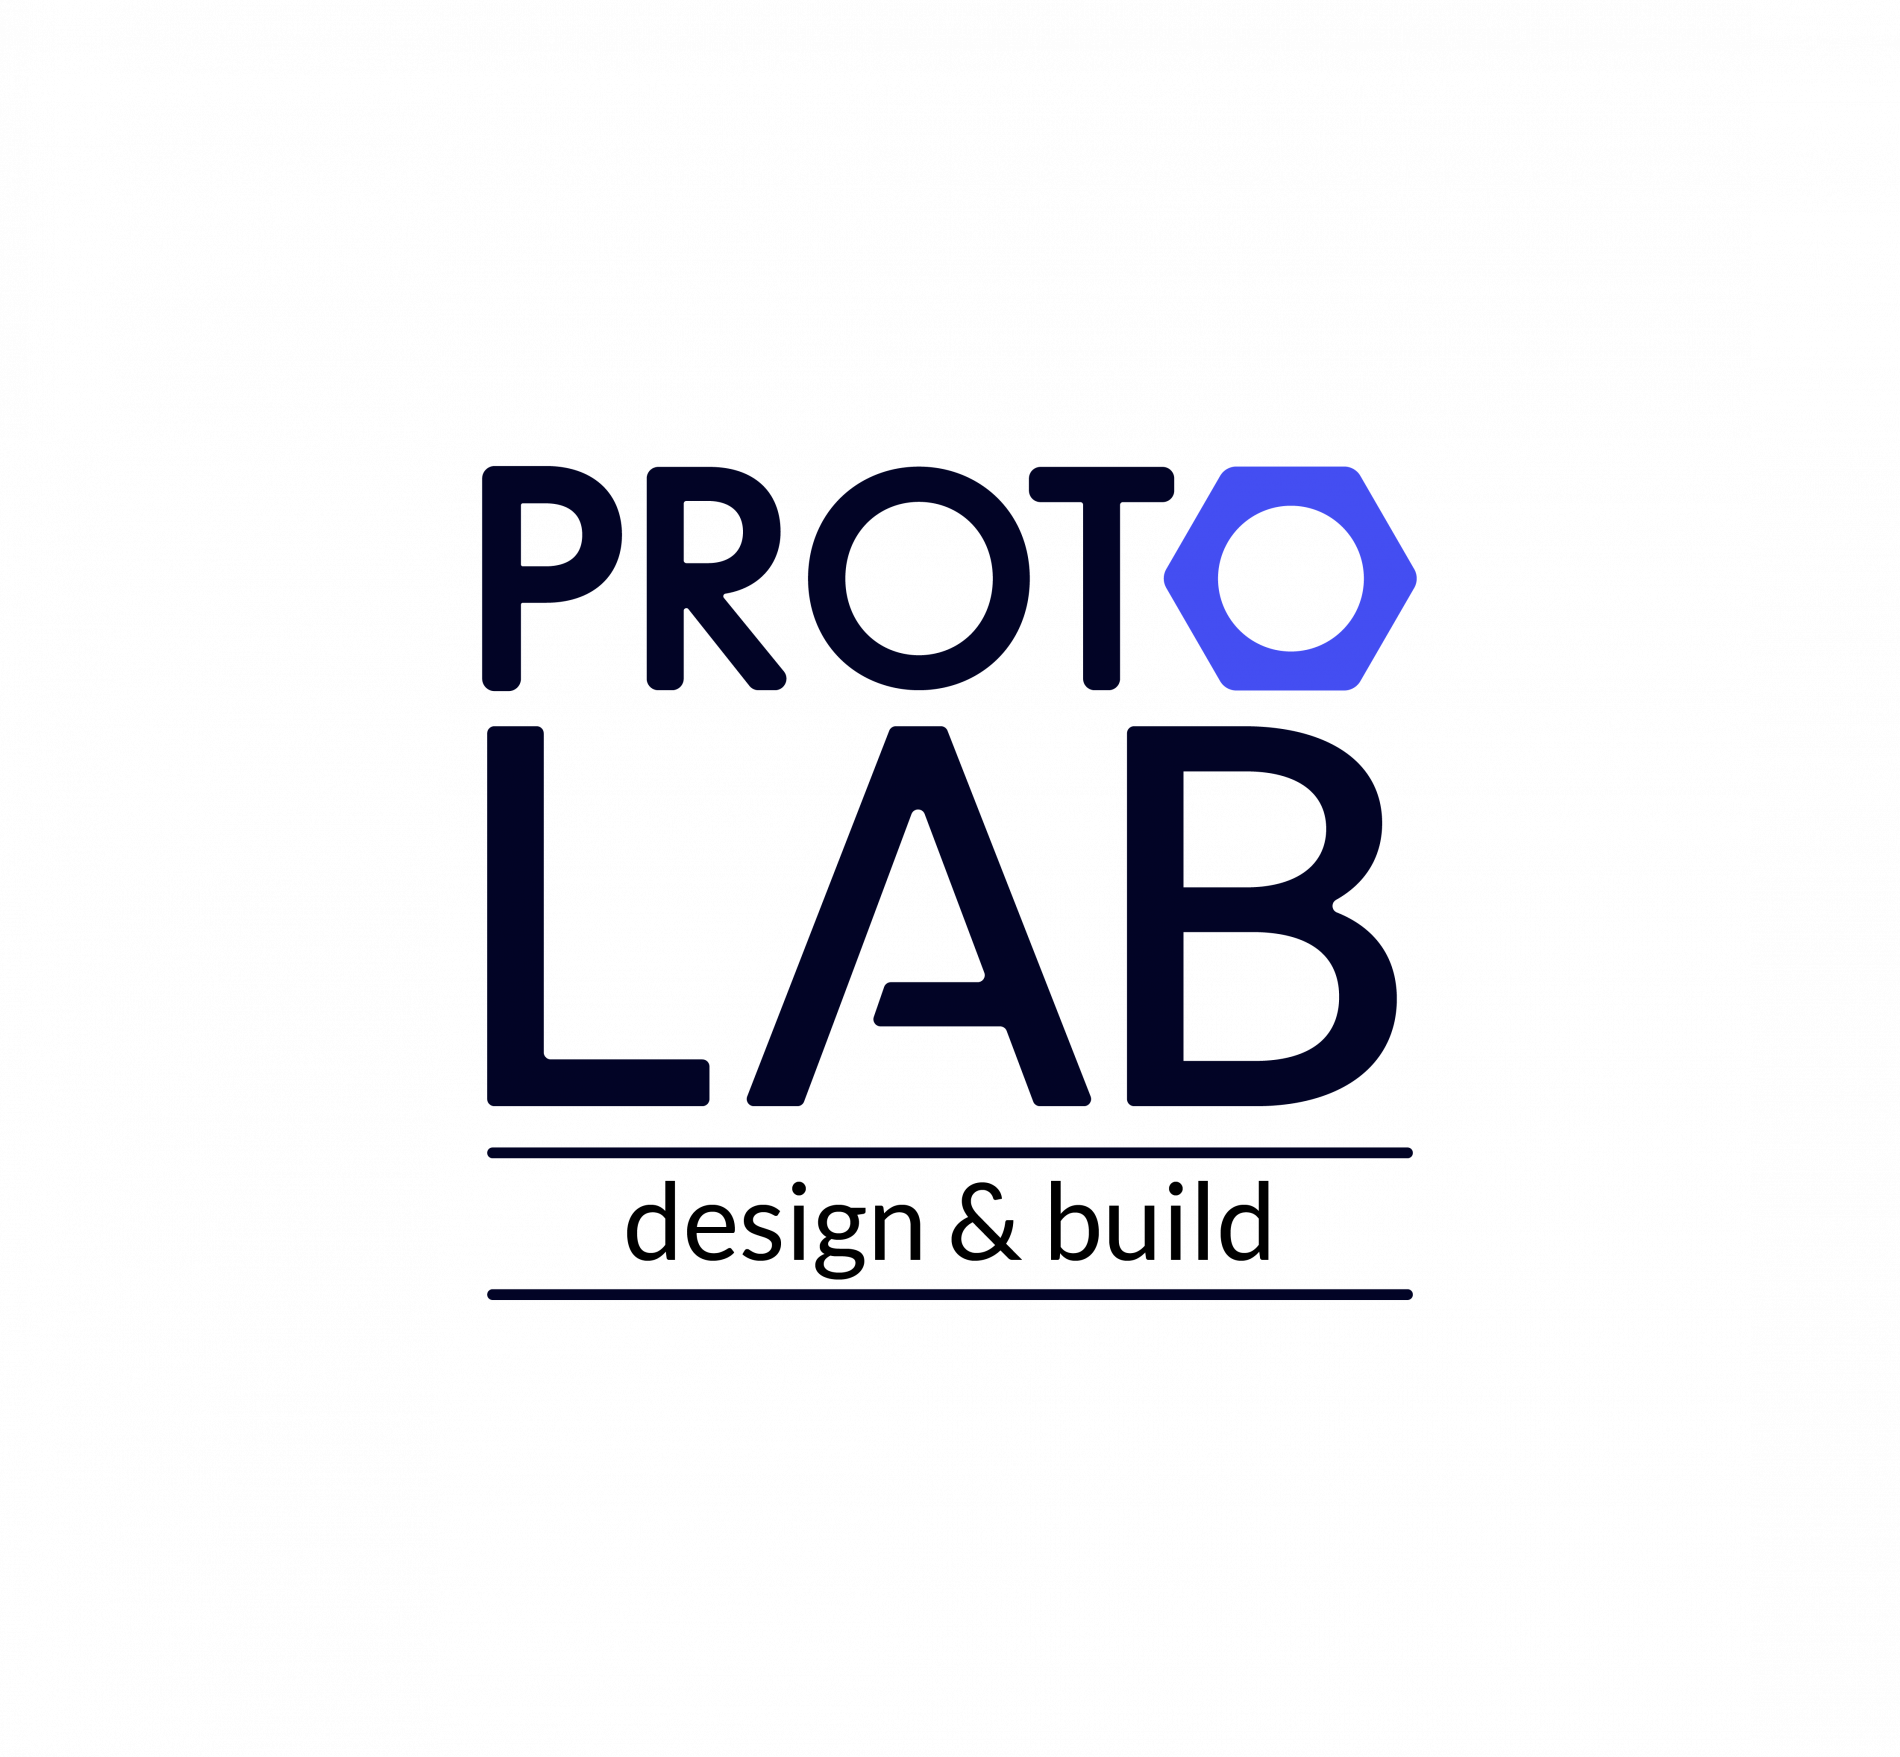 protolab_logo_dc_transparent-04.png